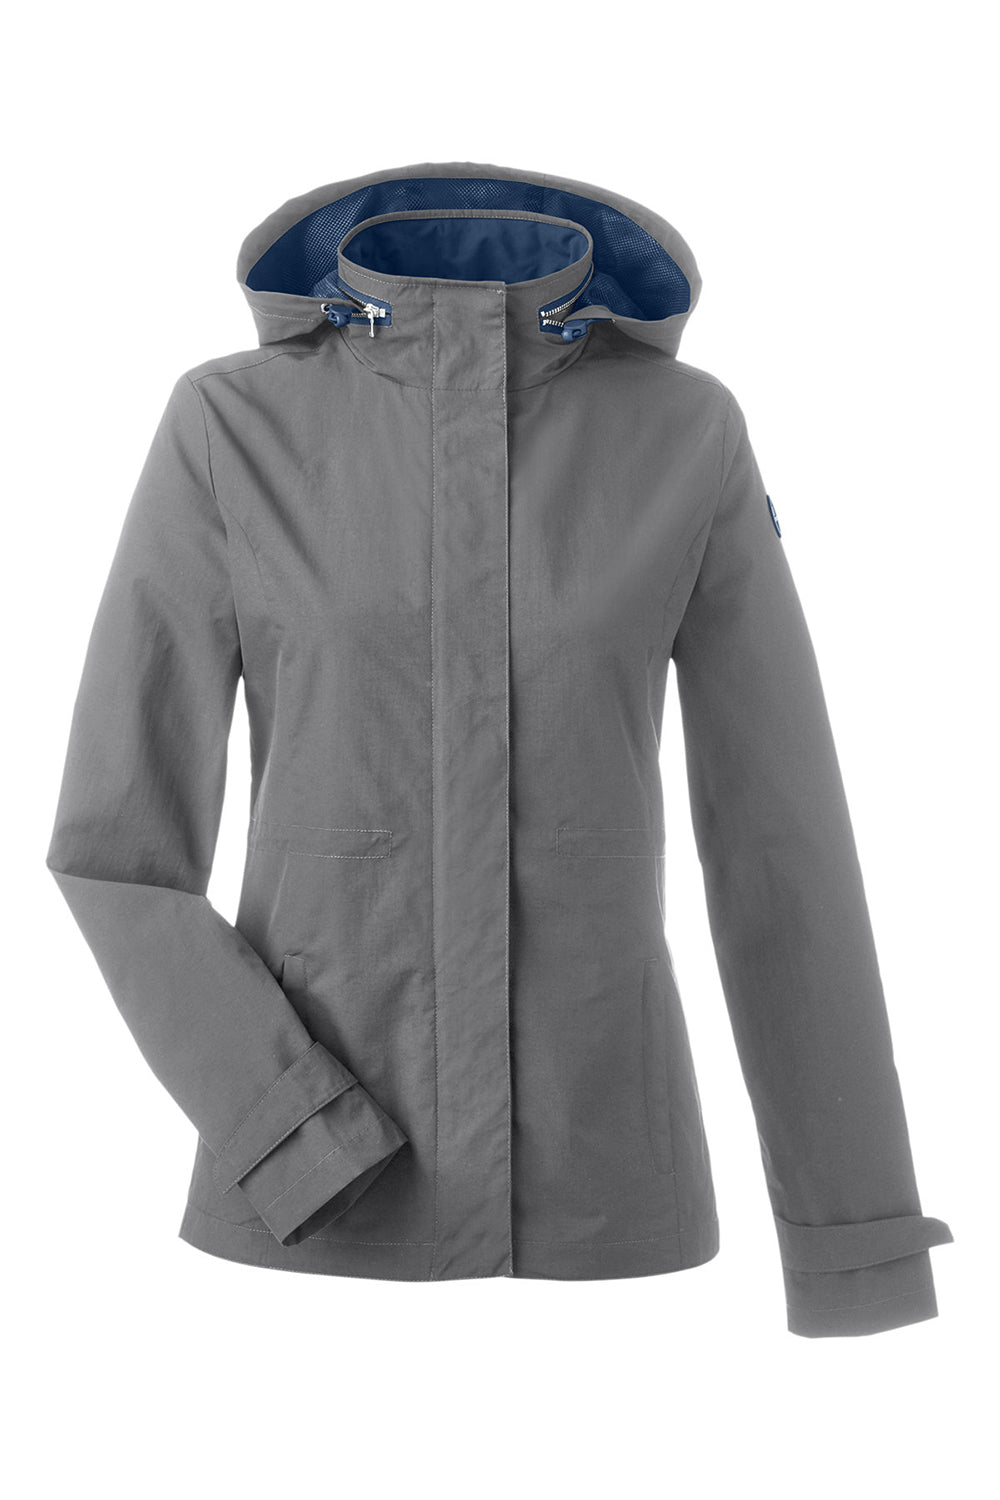 Nautica N17183 Womens Voyage Full Zip Hooded Jacket Graphite Grey Flat Front